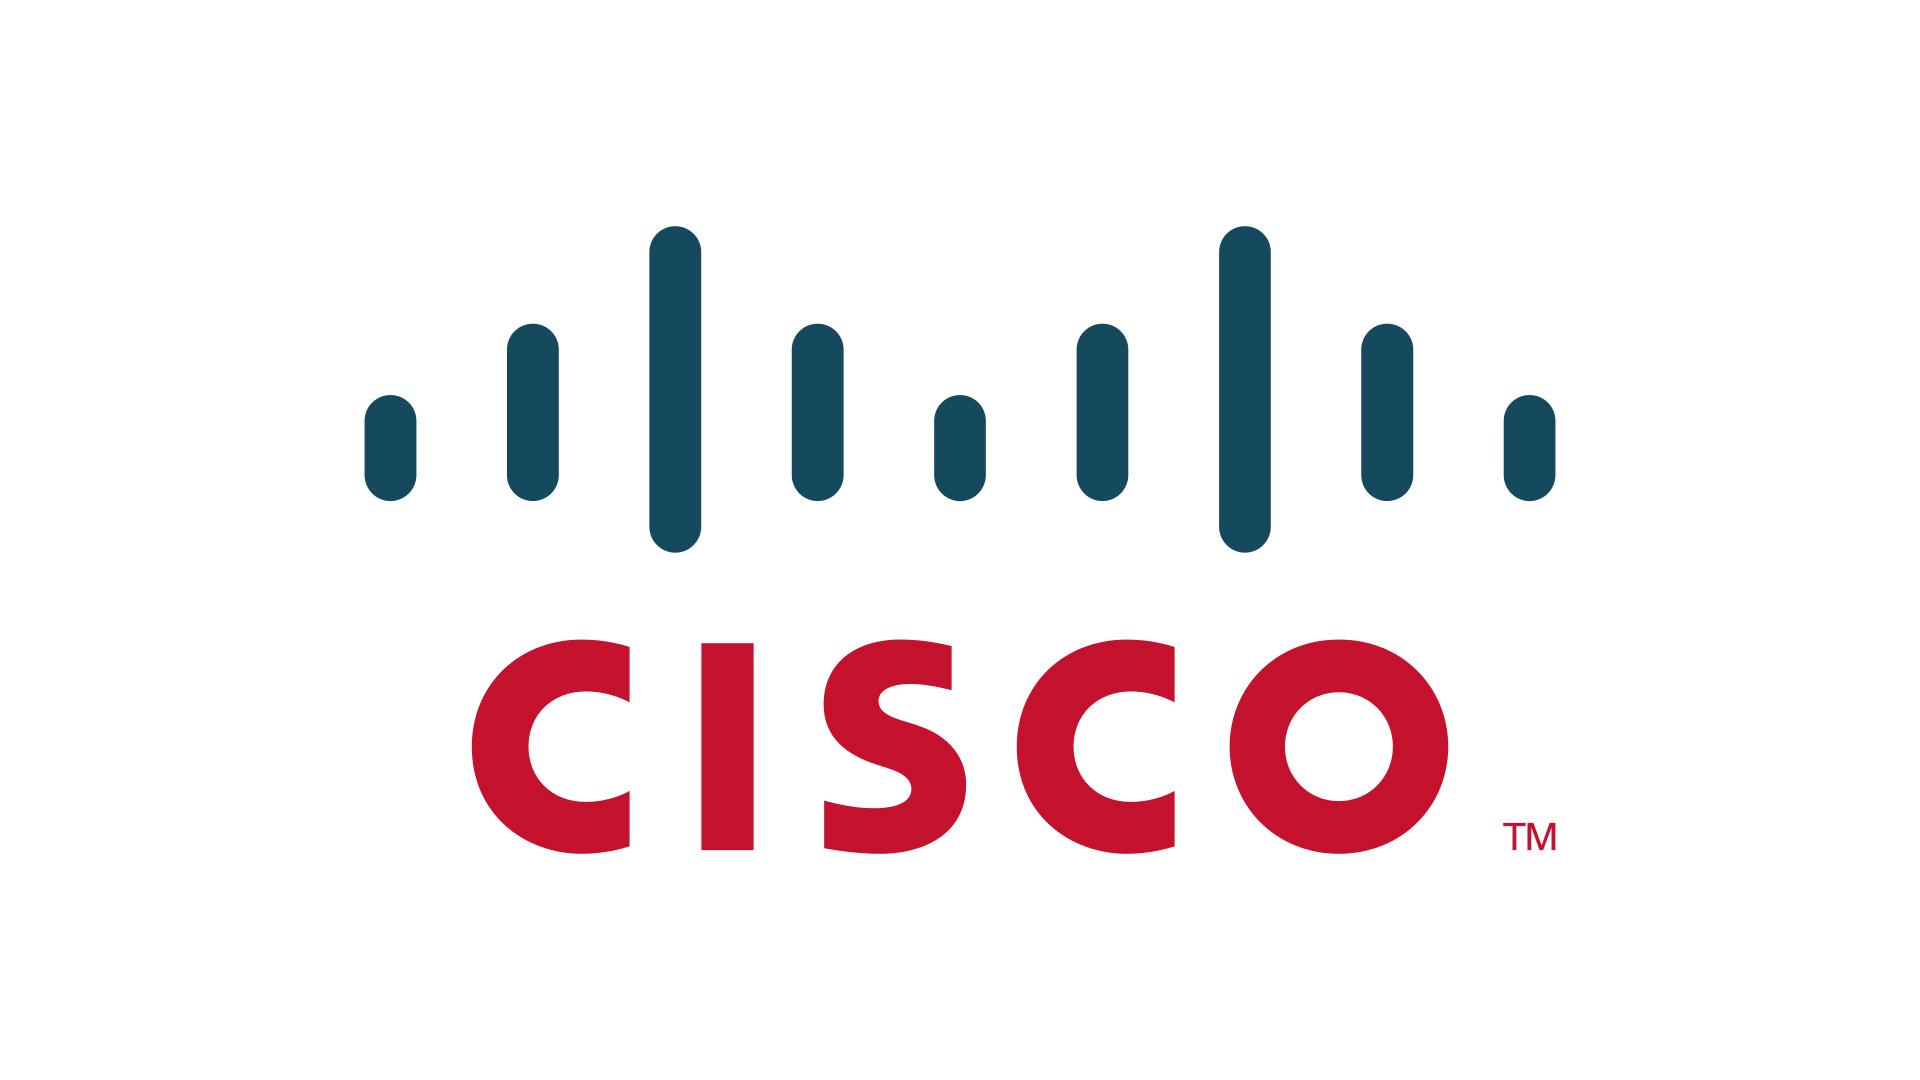 Cisco Logo Wallpaper 2018 In Brands & Logos